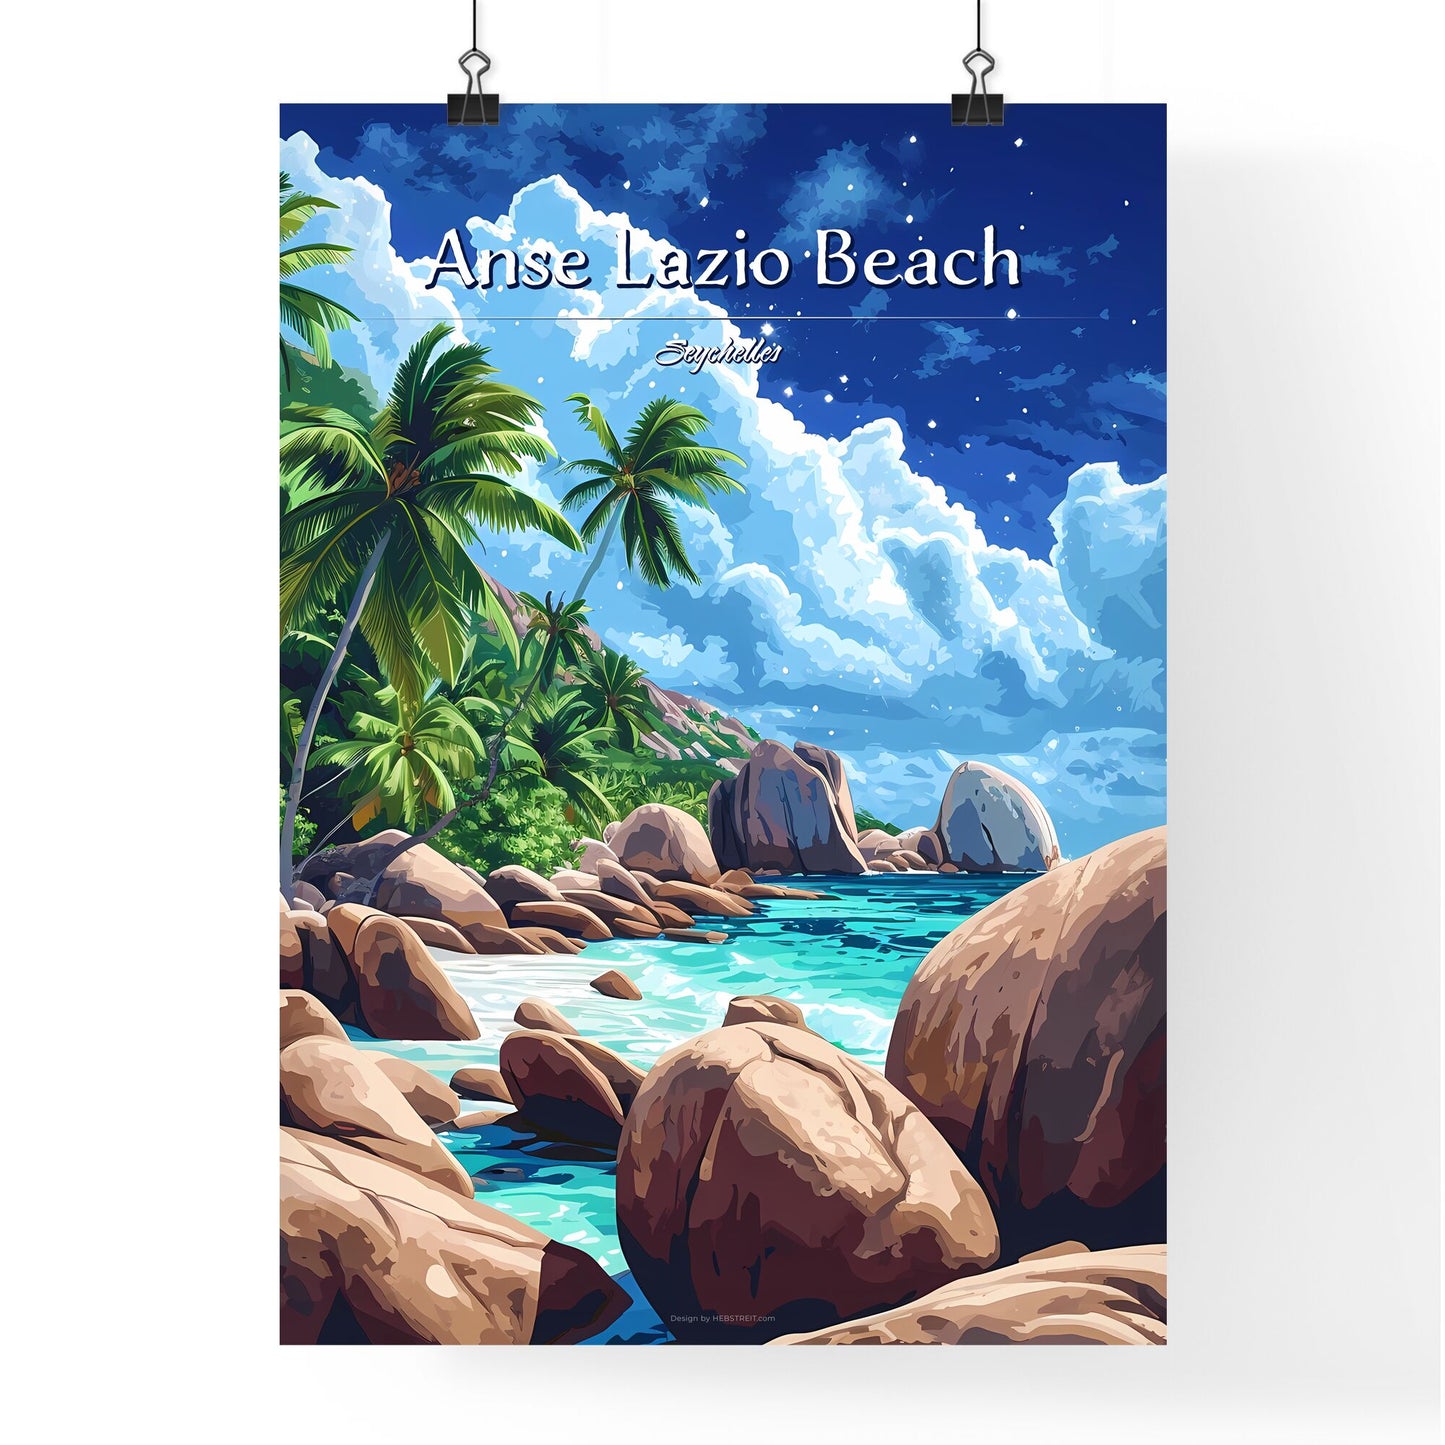 Anse Lazio Beach, Seychelles - Art print of a beach with palm trees and rocks Default Title